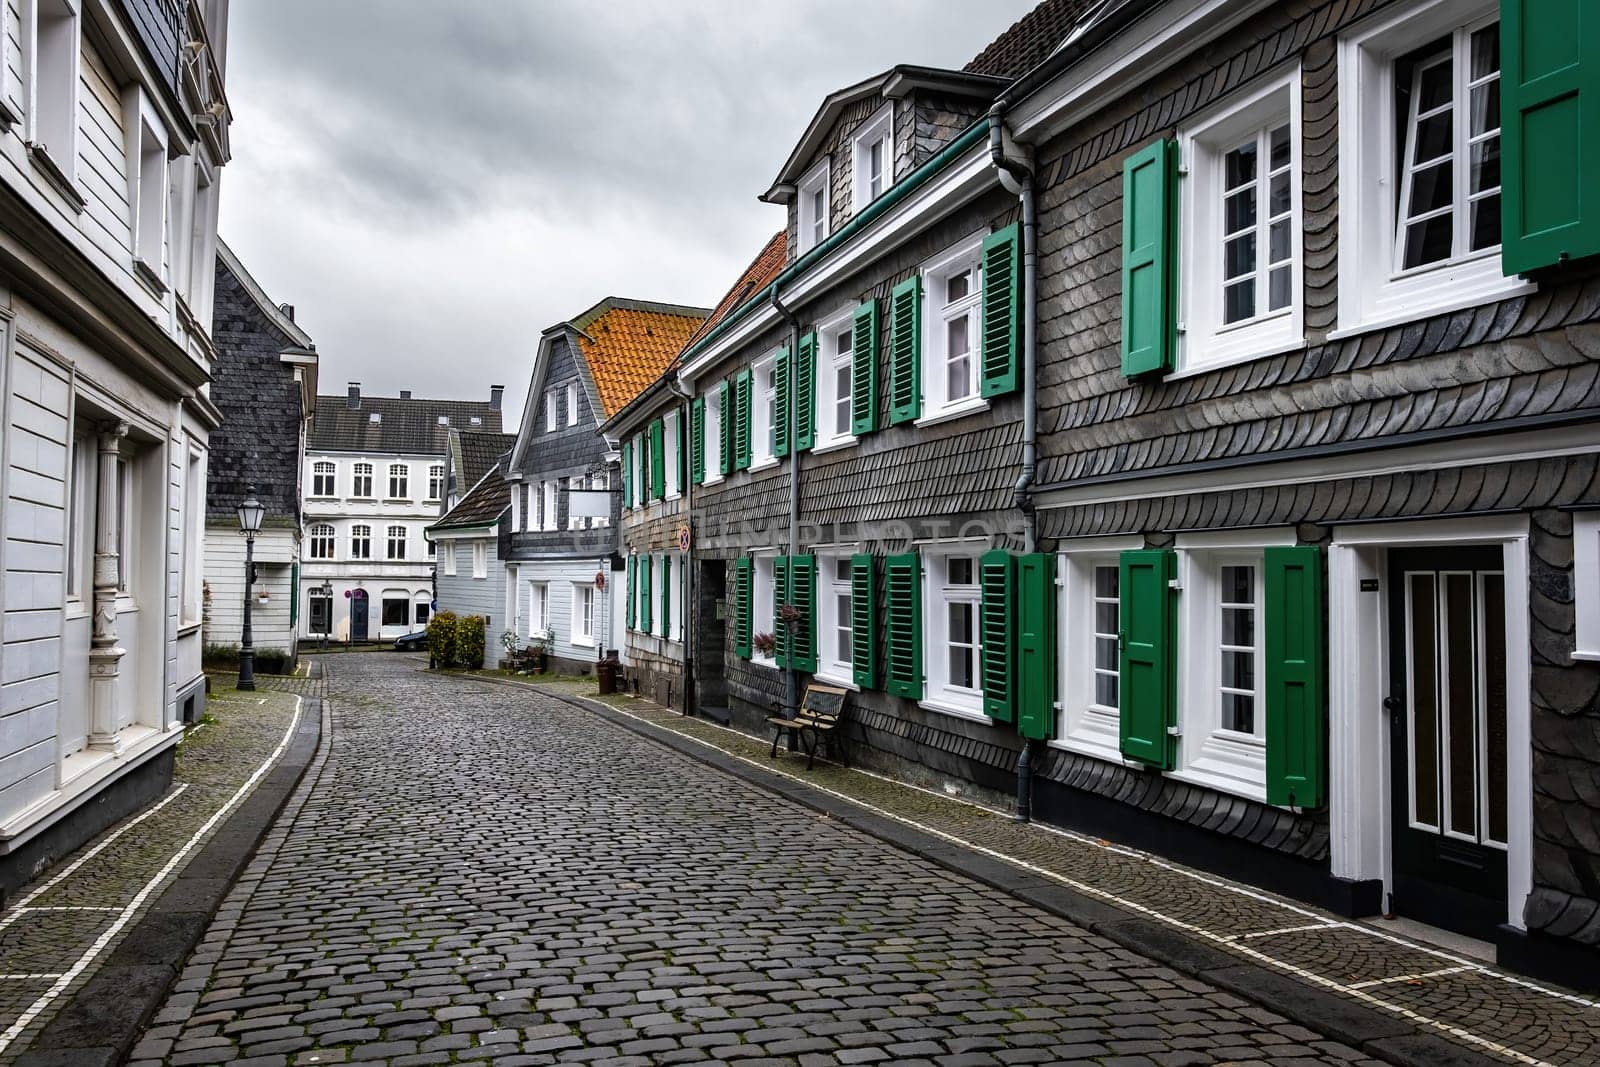 Beautiful Slate houses and paving stones road, sightseeing in Greafrath, North-Rhine Westphalia, Germany